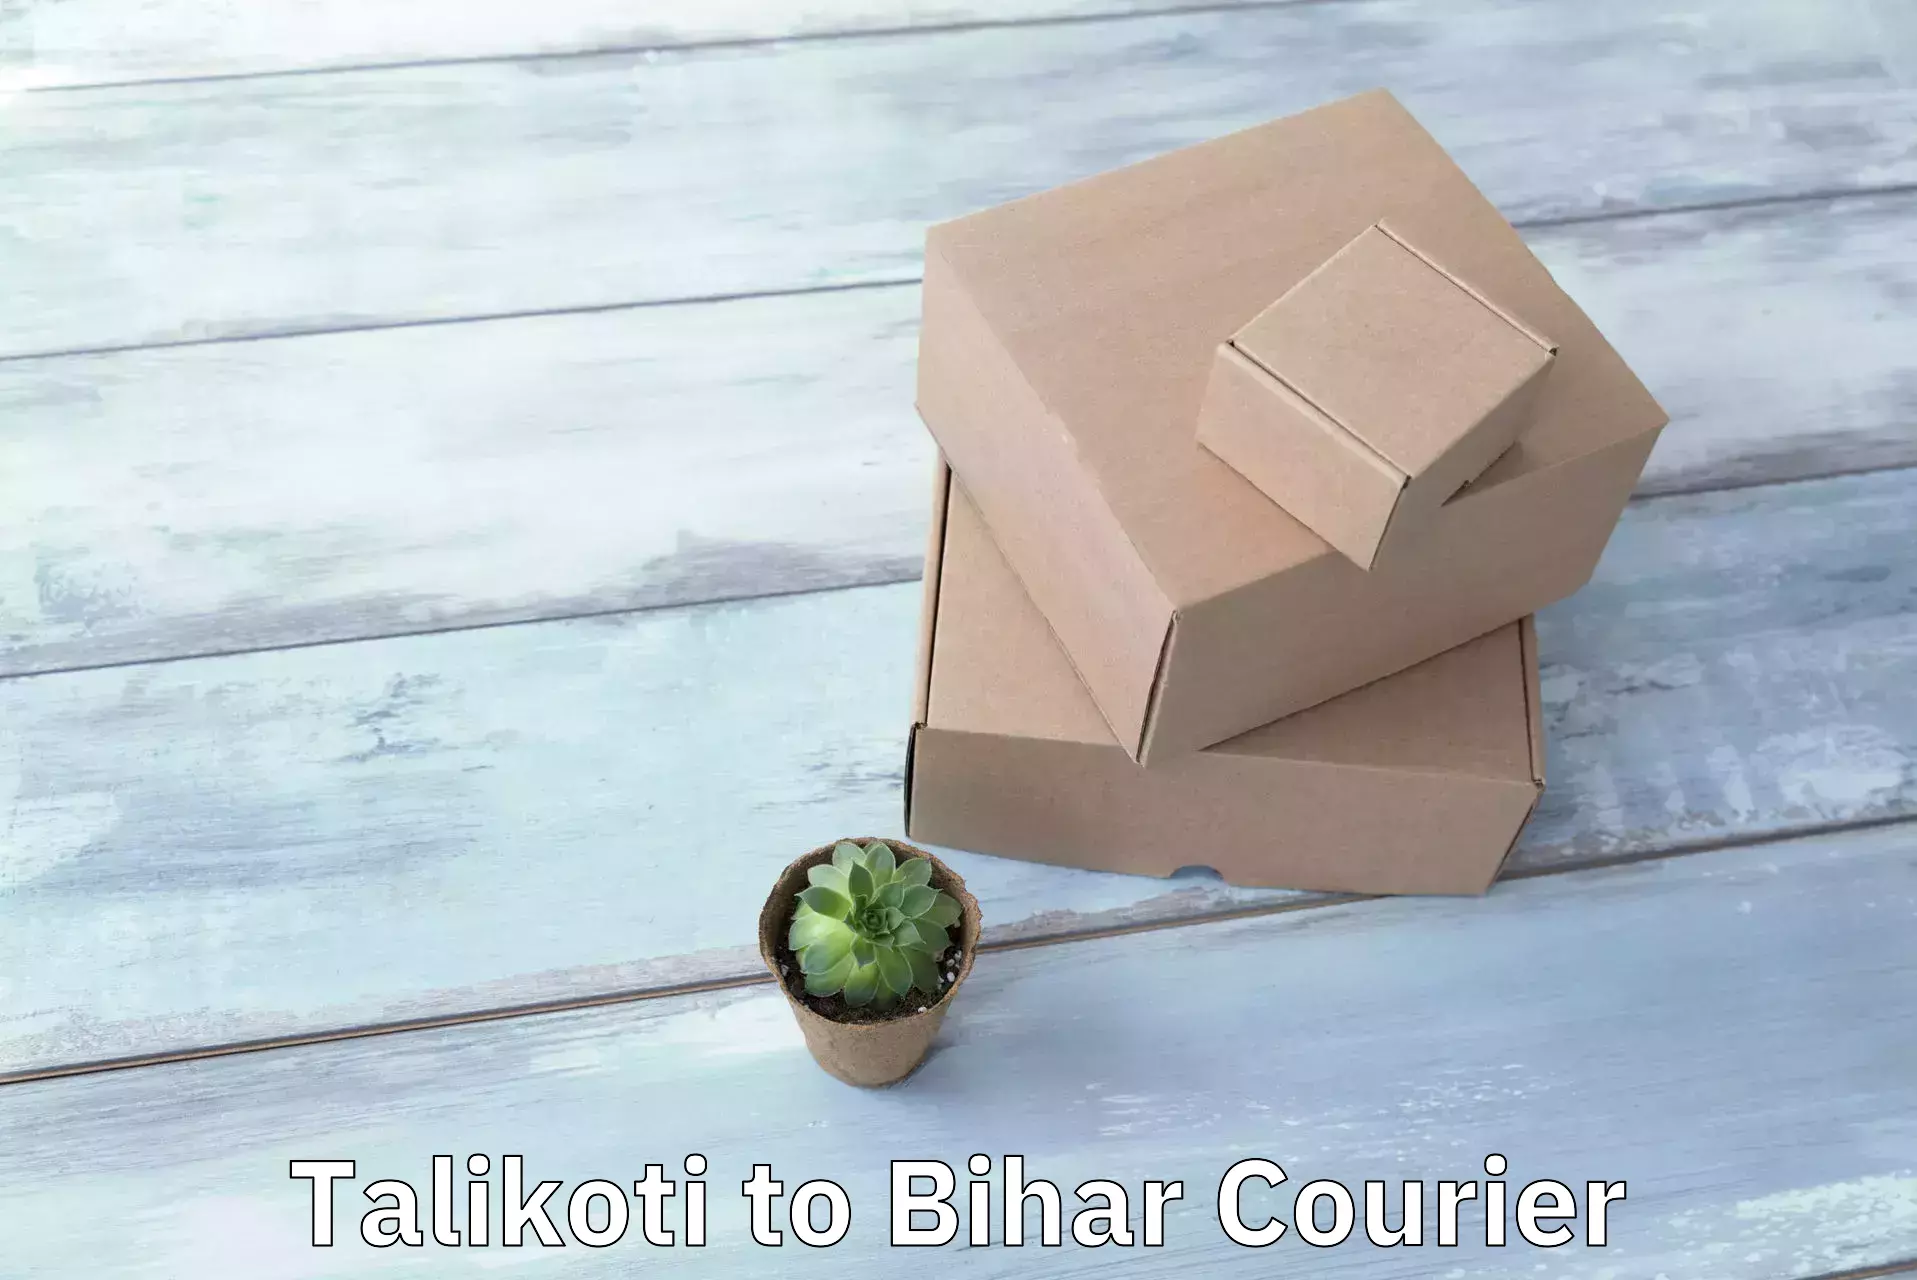 Custom courier packaging Talikoti to Mairwa